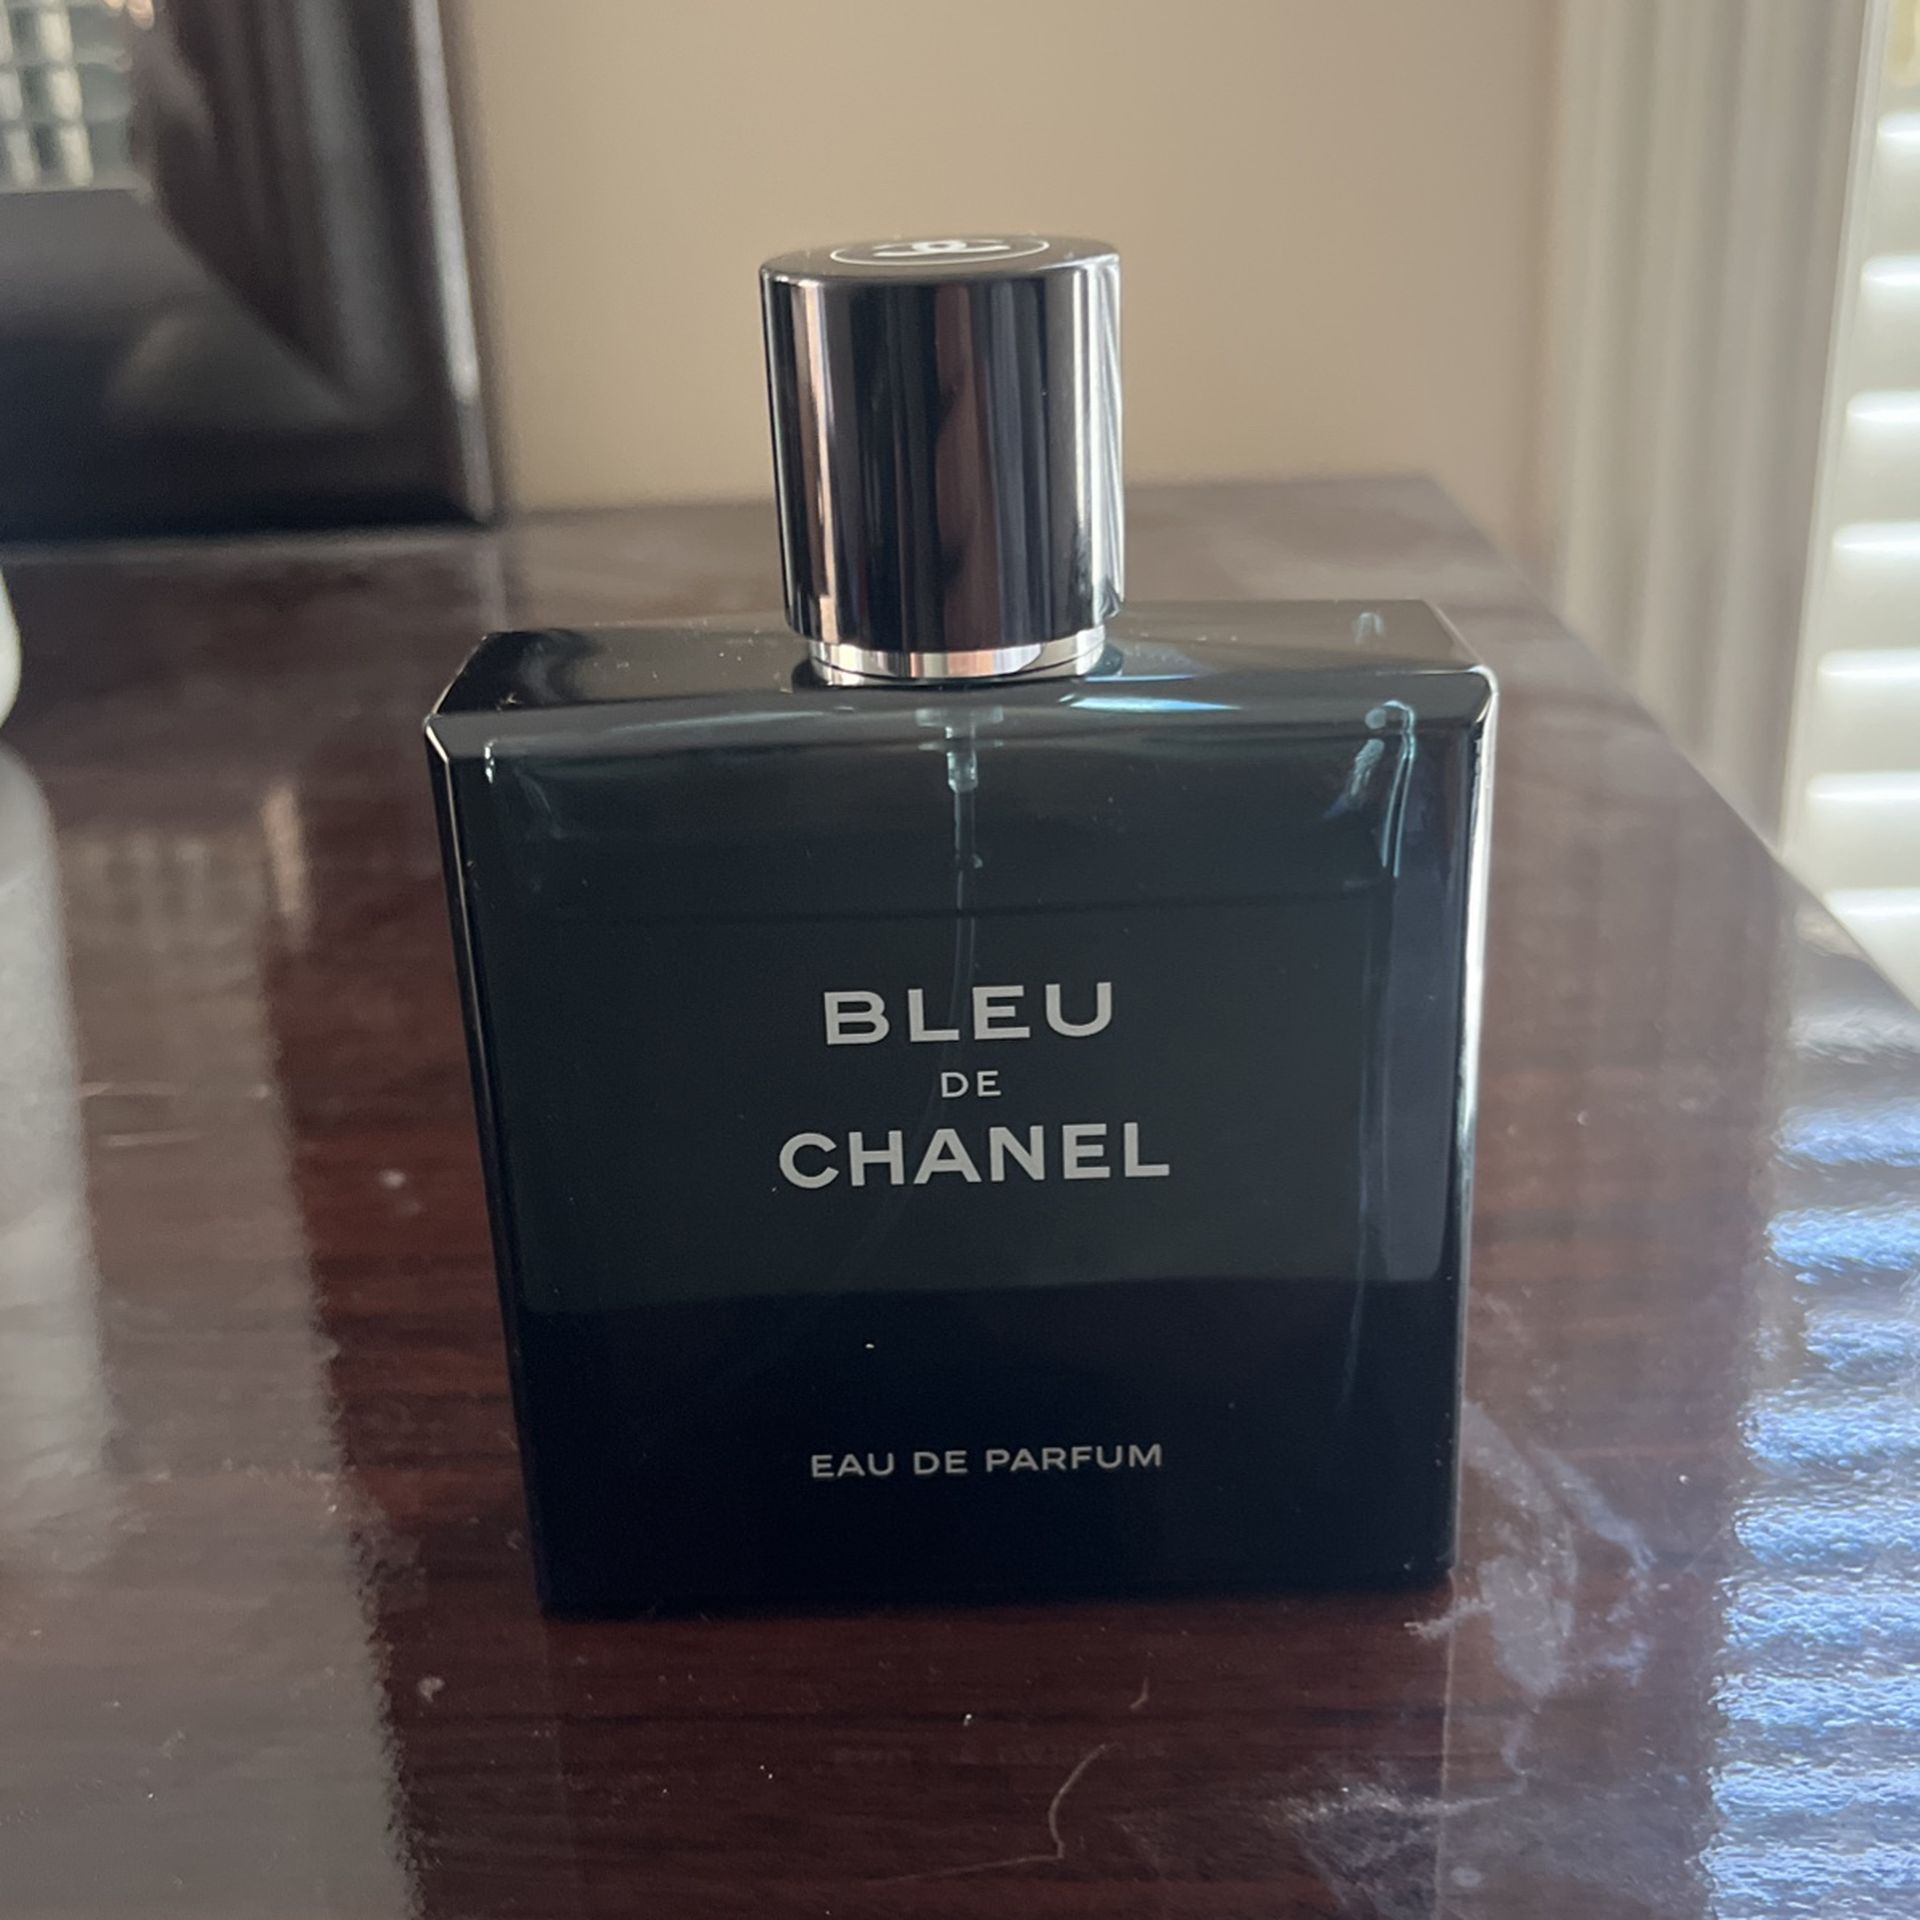 Chanel Bleu de Chanel Eau de Toilette Spray - 3.4 oz.